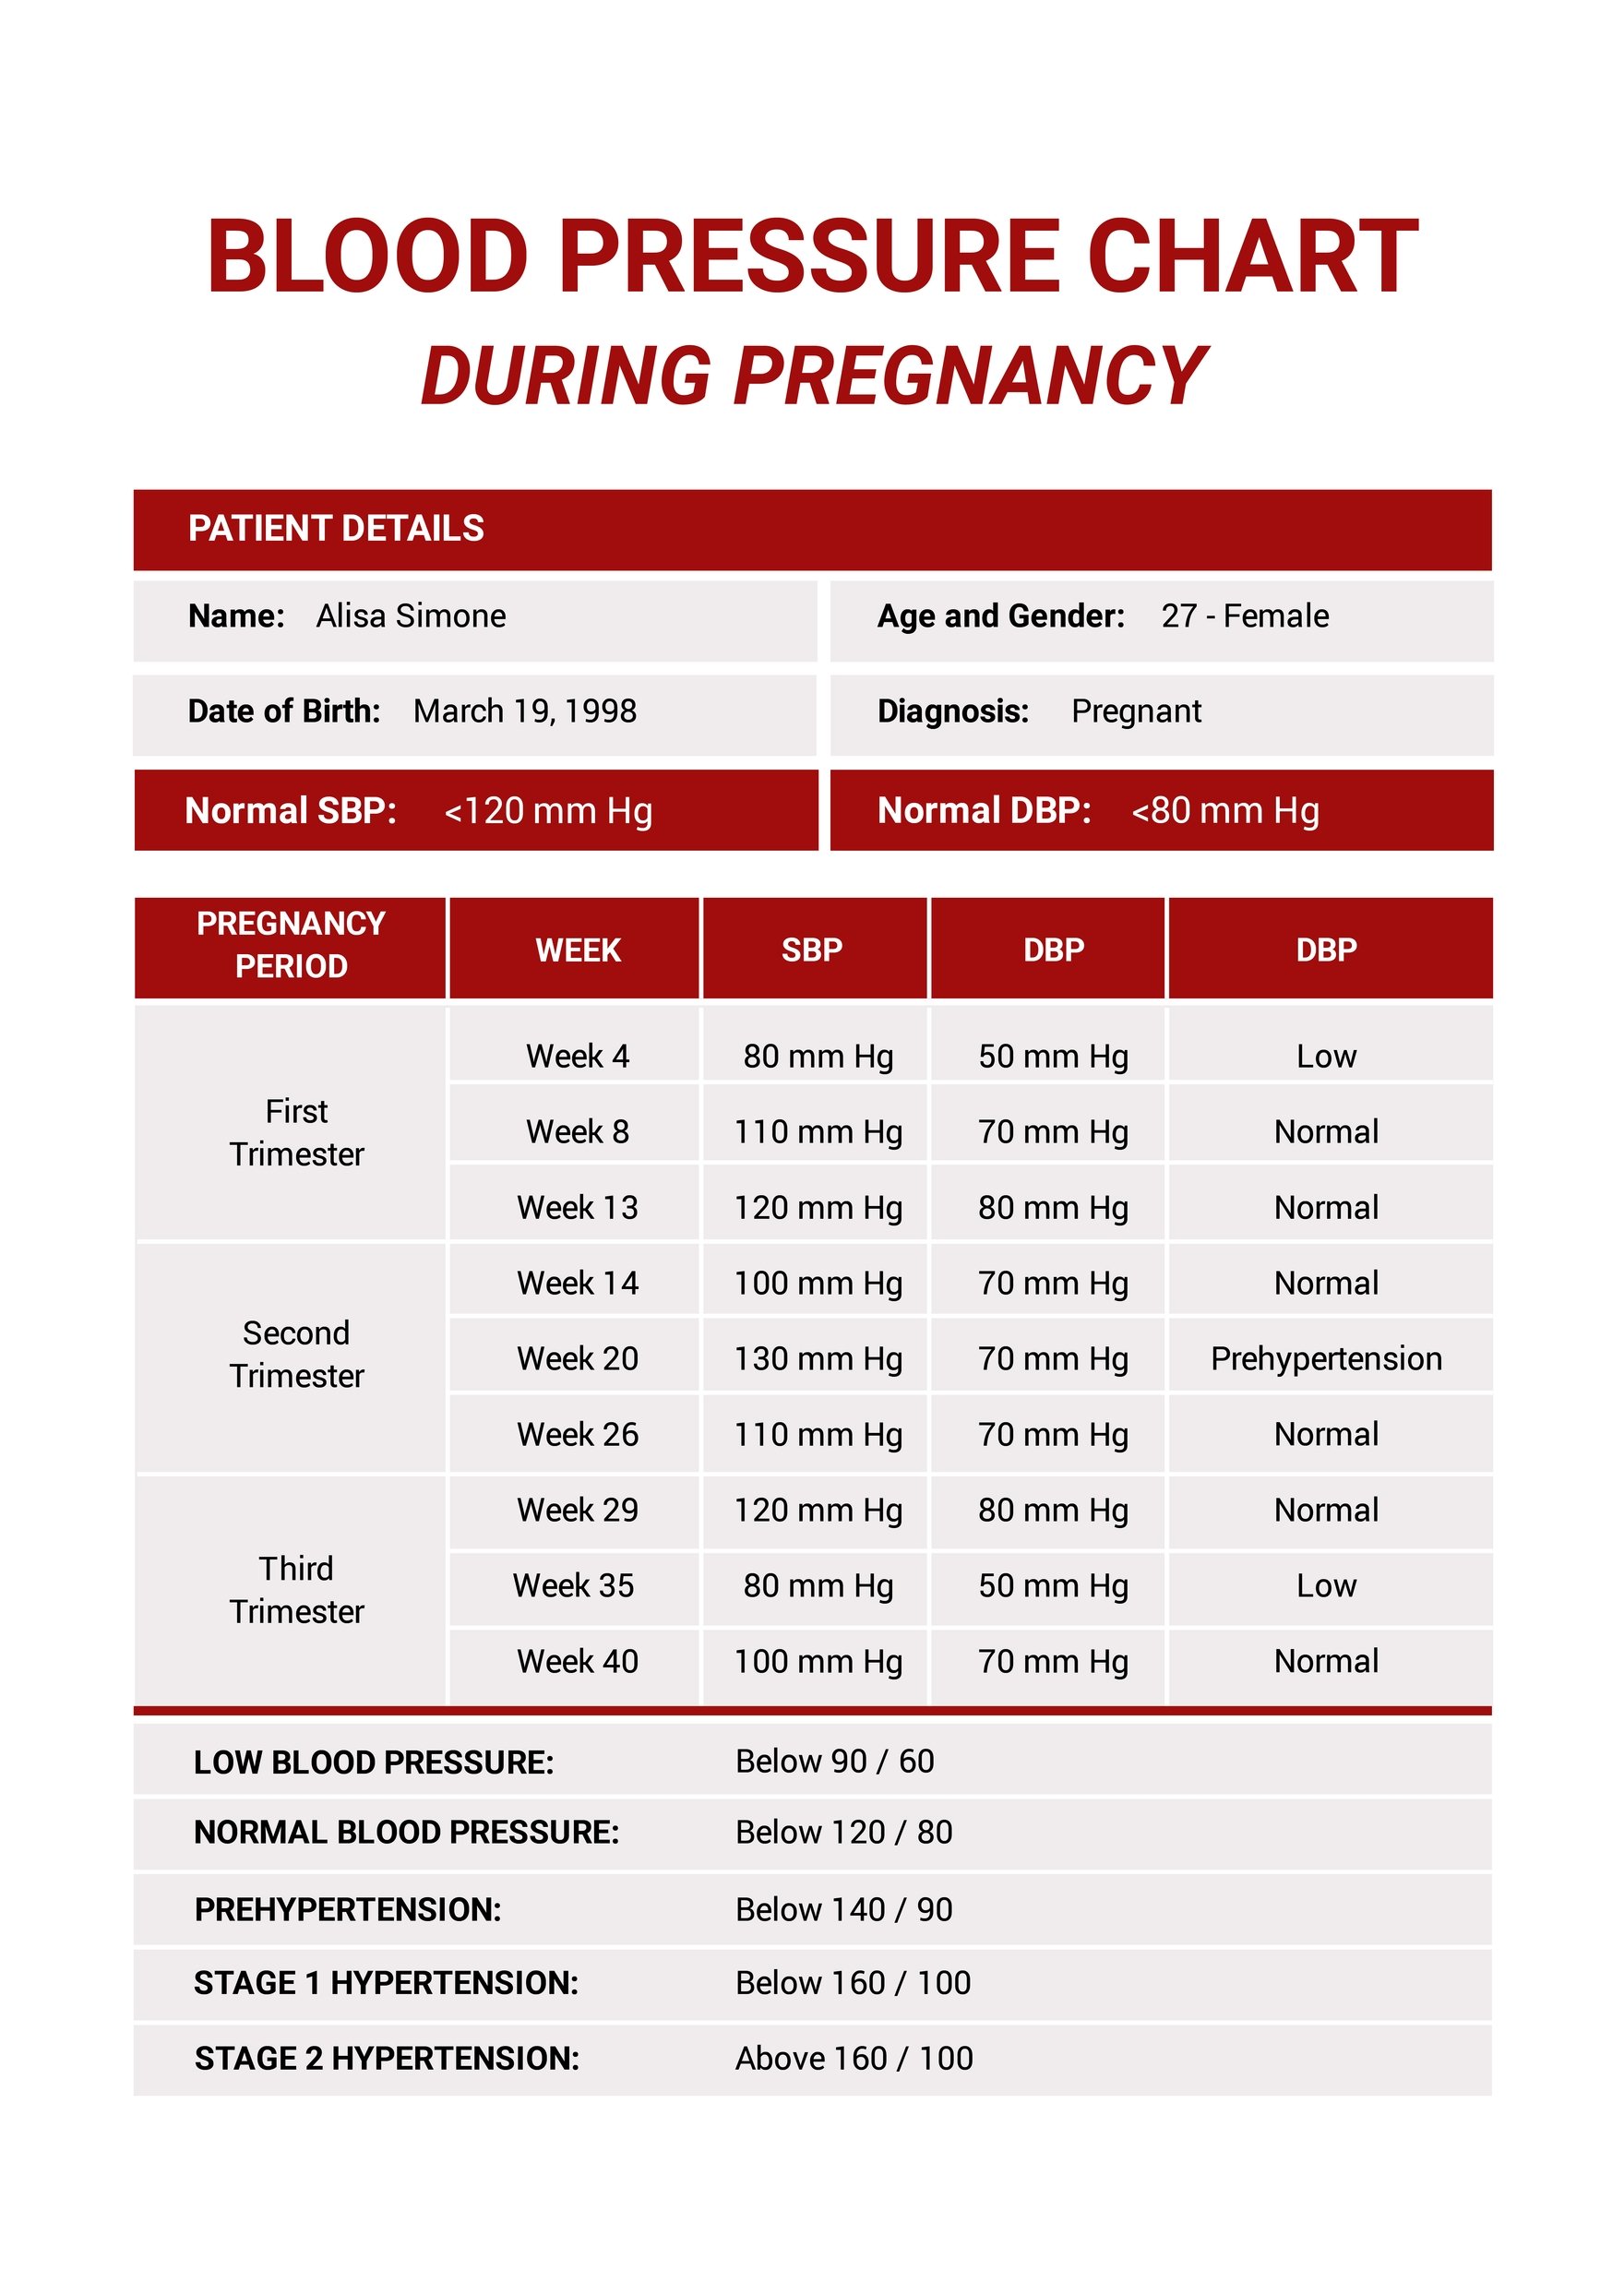 Normal Blood Pressure Range During Pregnancy Chart